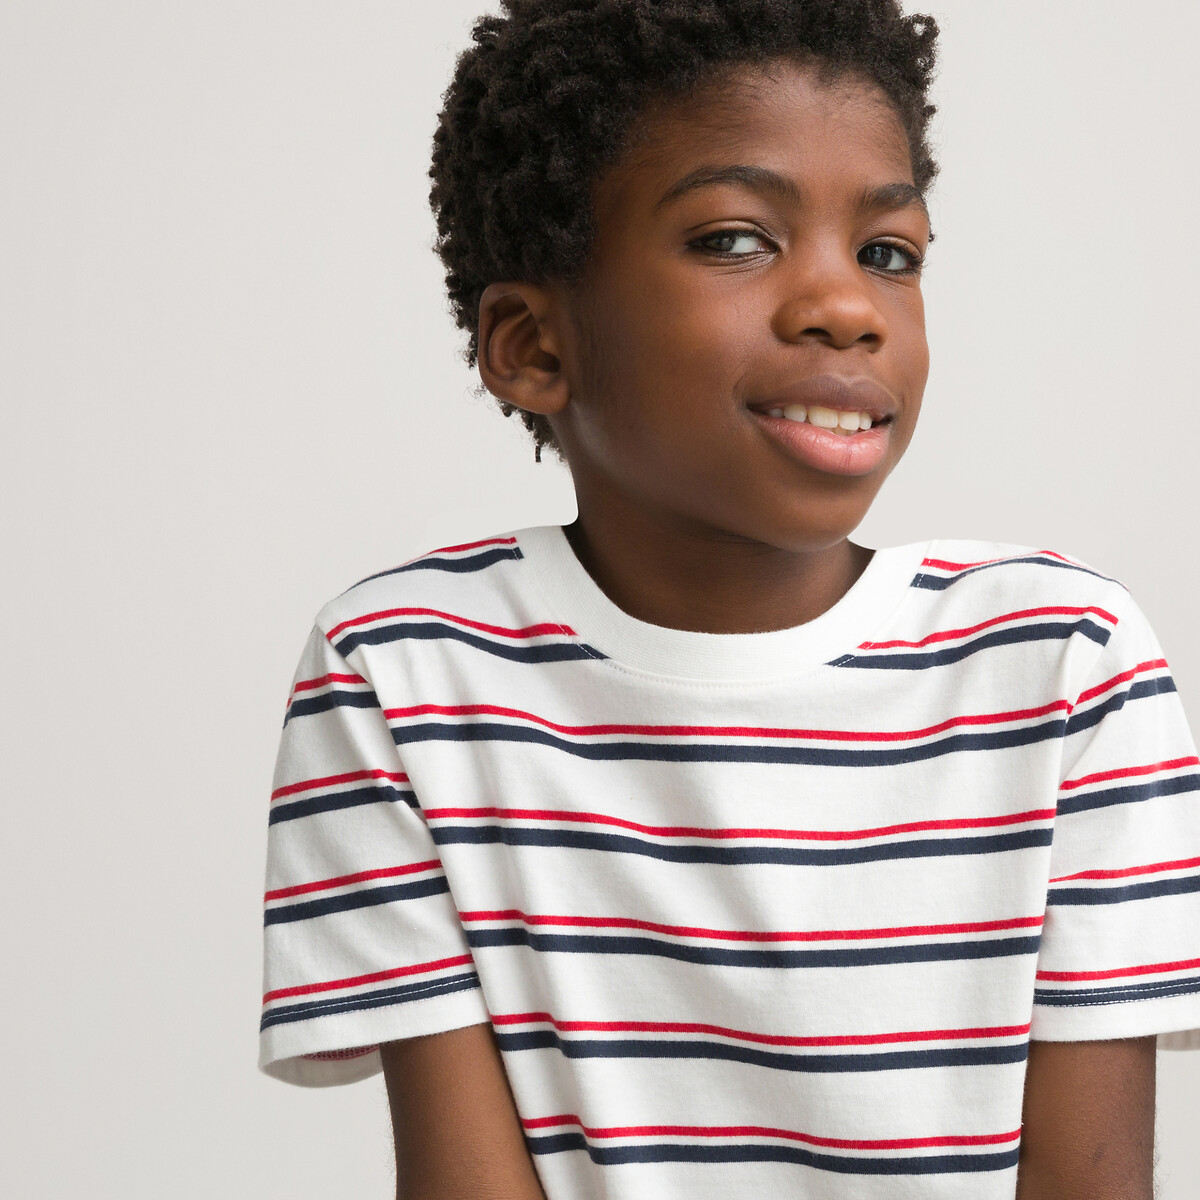 Plain Black Childrens Kids Boys Girls Childs Cotton Tee T-shirt tshirt Age 3-14 